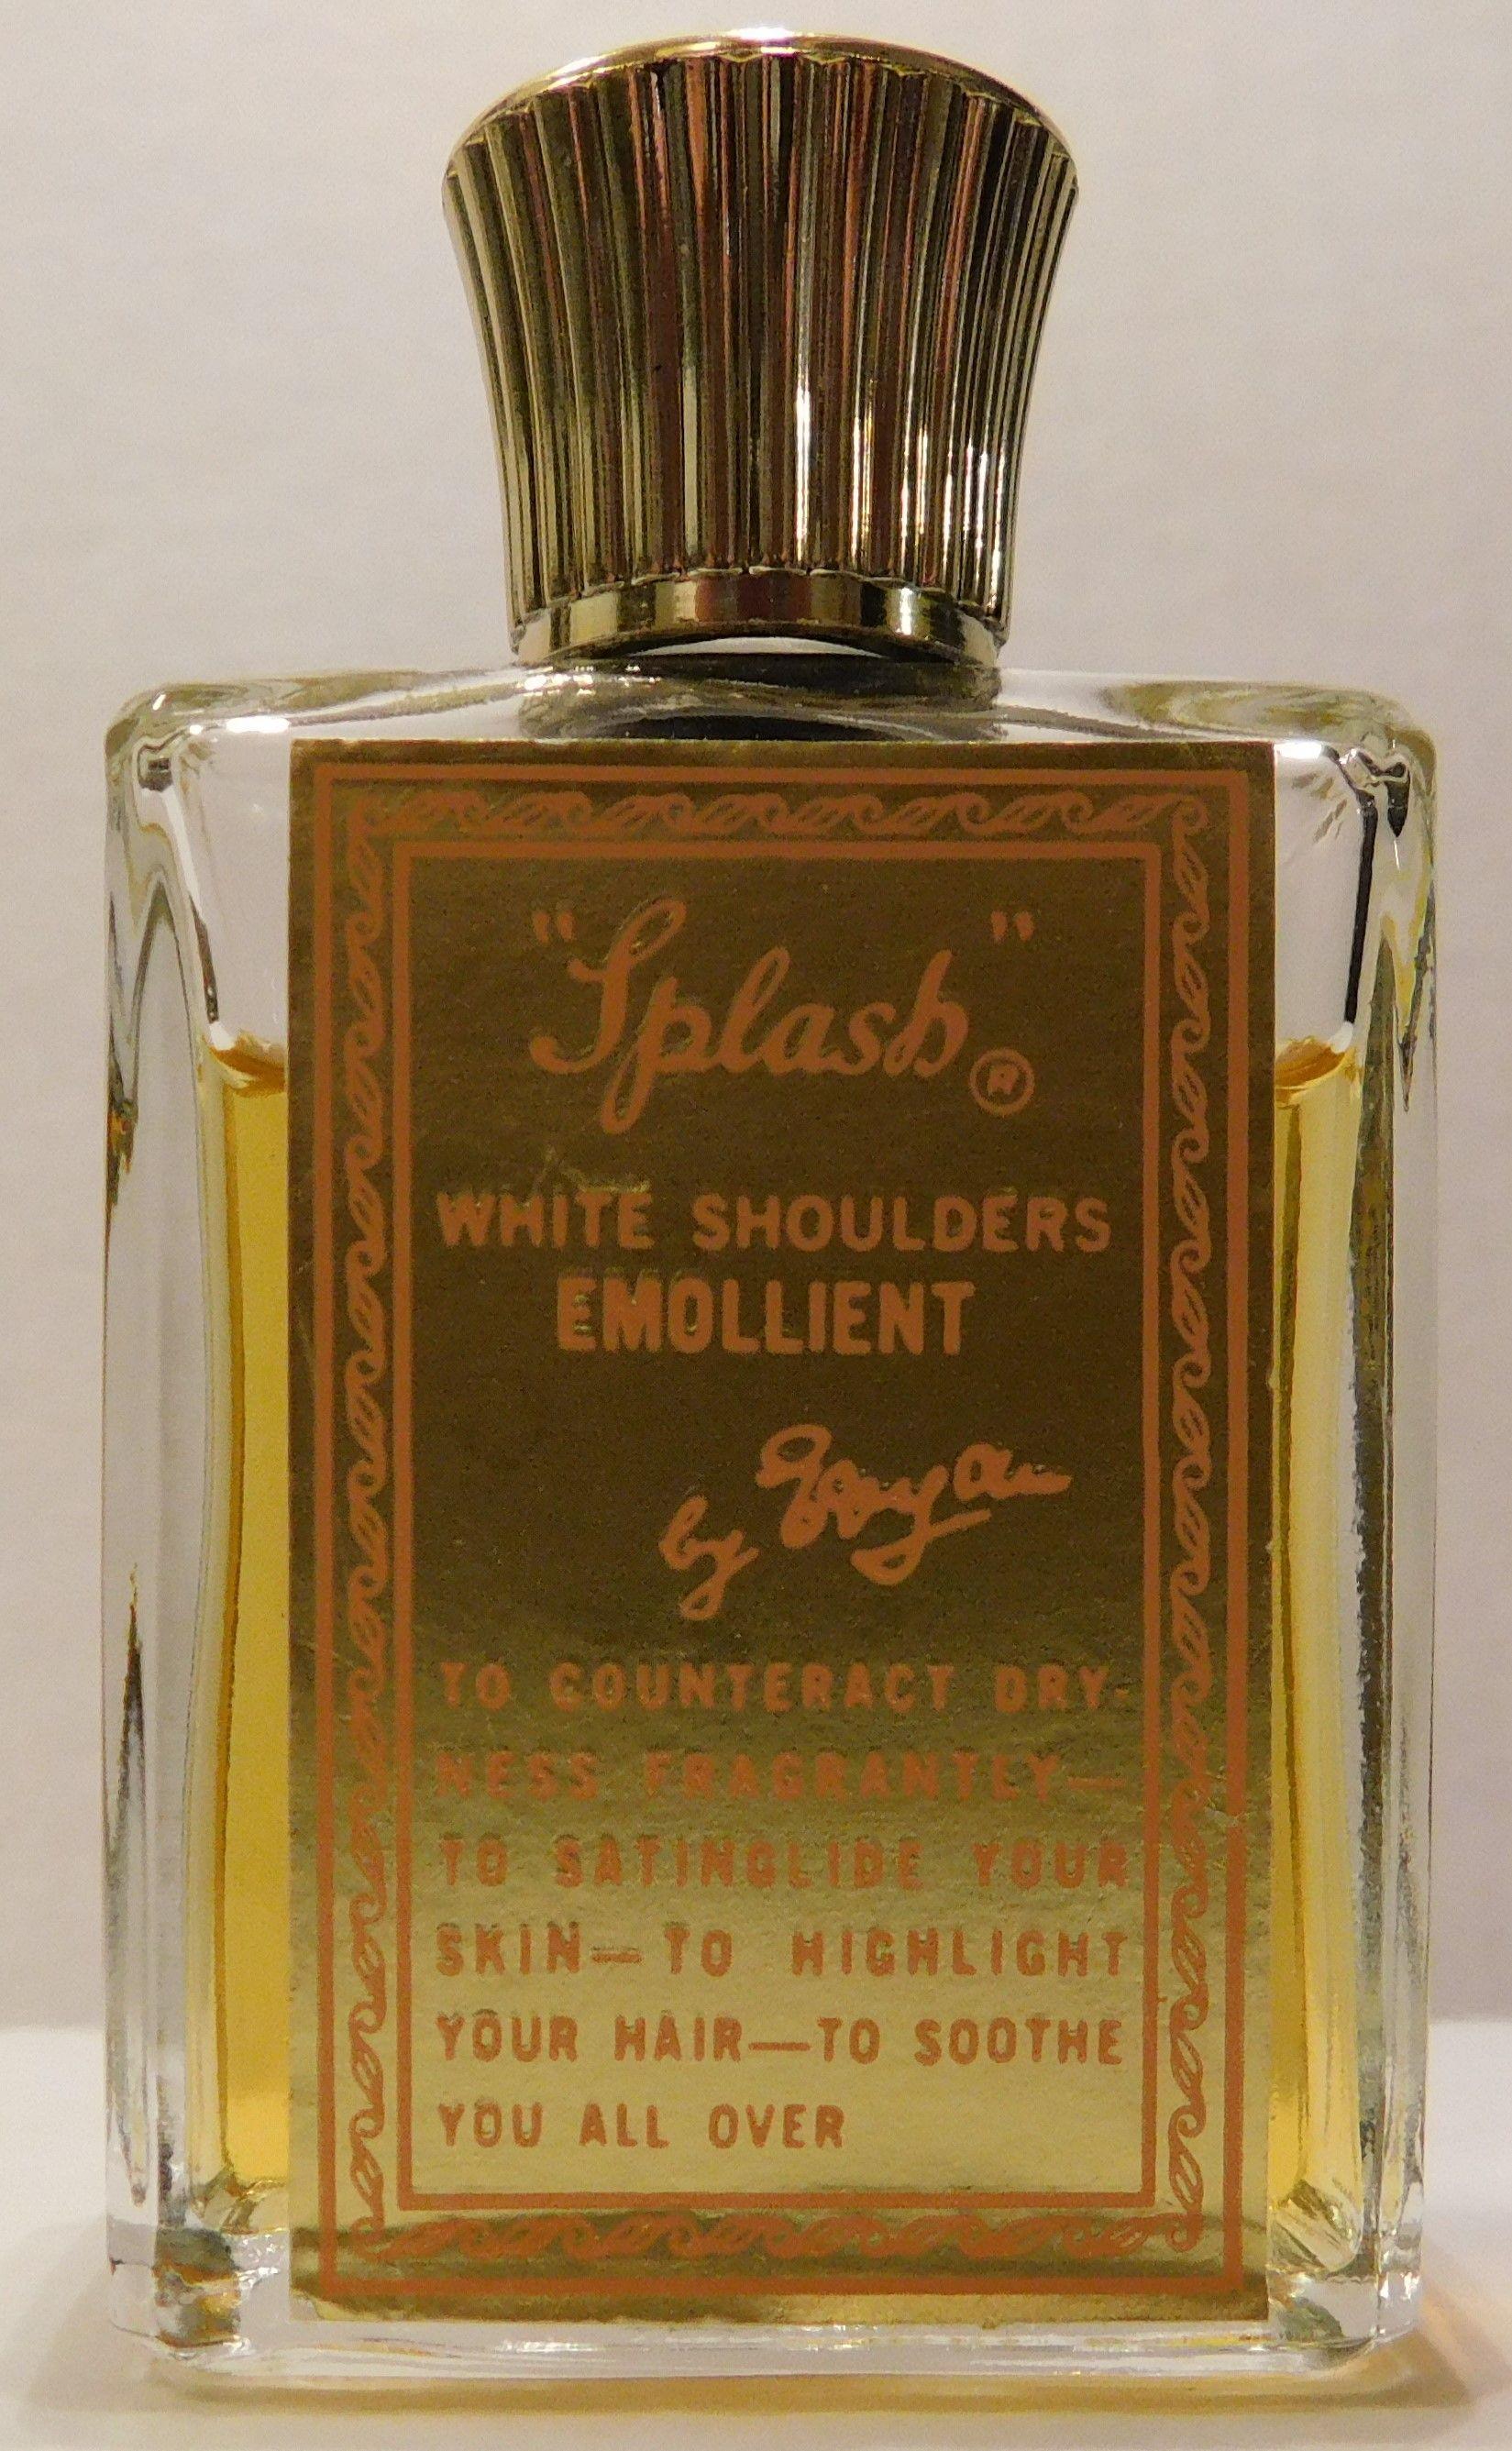 White Shoulders Perfume Logo - White Shoulders by Elizabeth Arden (originally by Evyan)